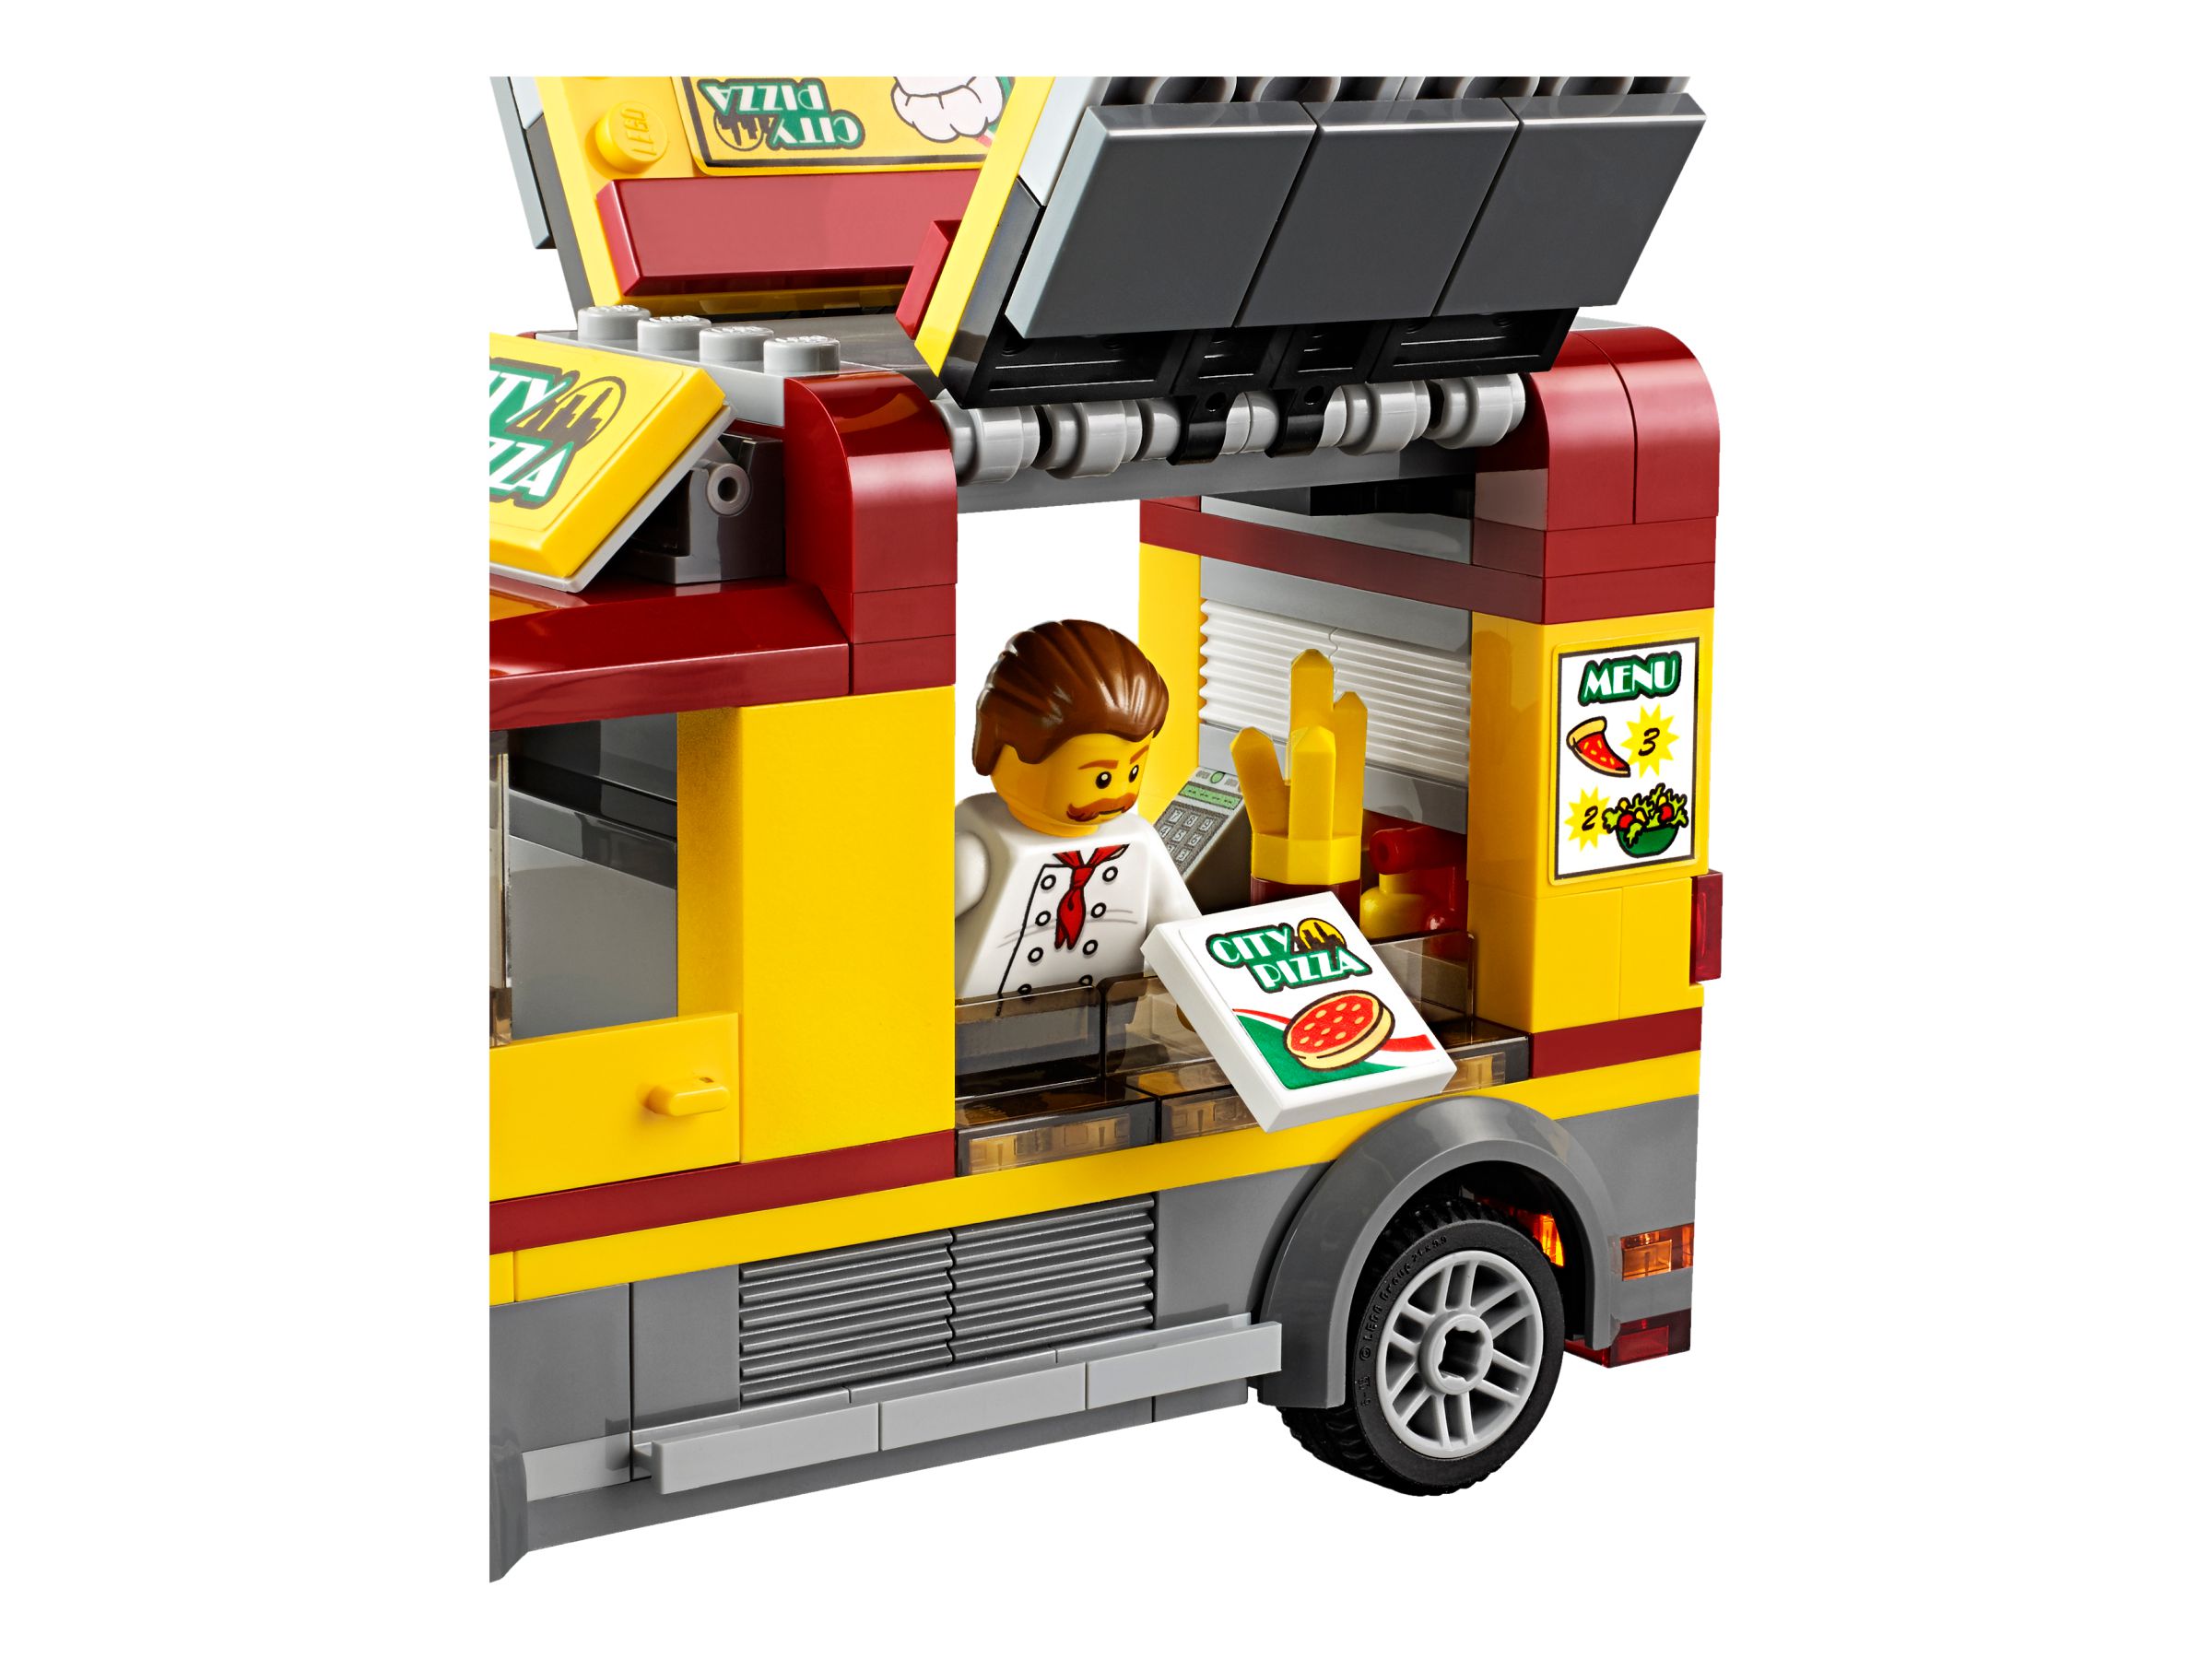 LEGO_60150_alt3.jpg